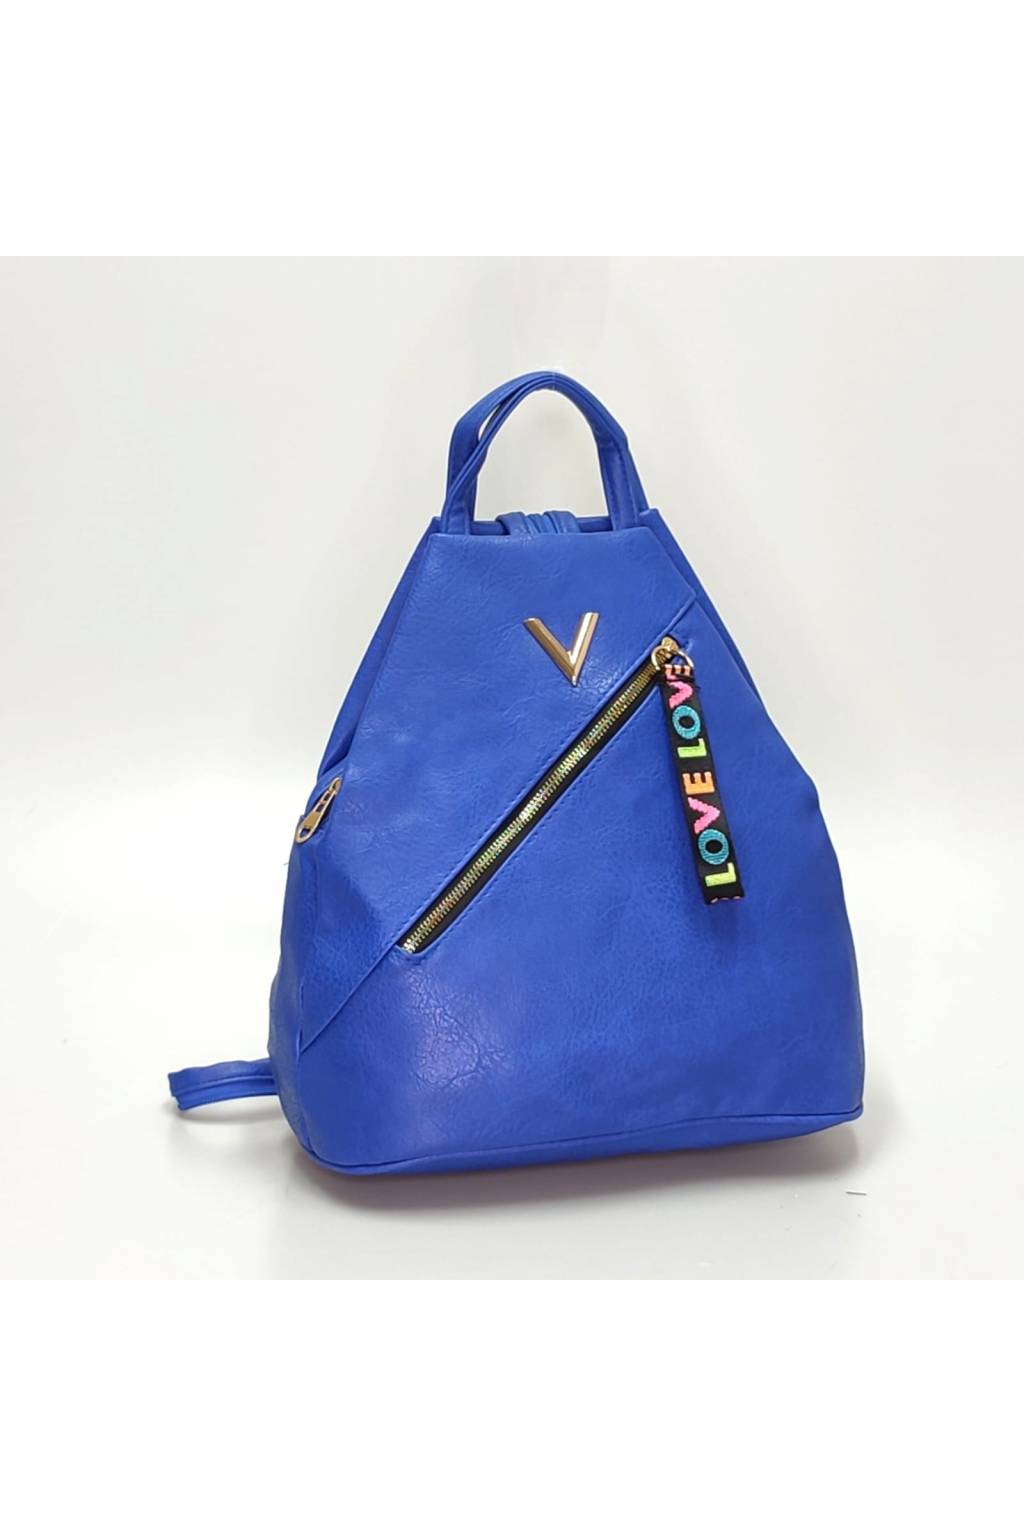 Dámsky ruksak 6880 modrý www.kabelky vypredaj (24)